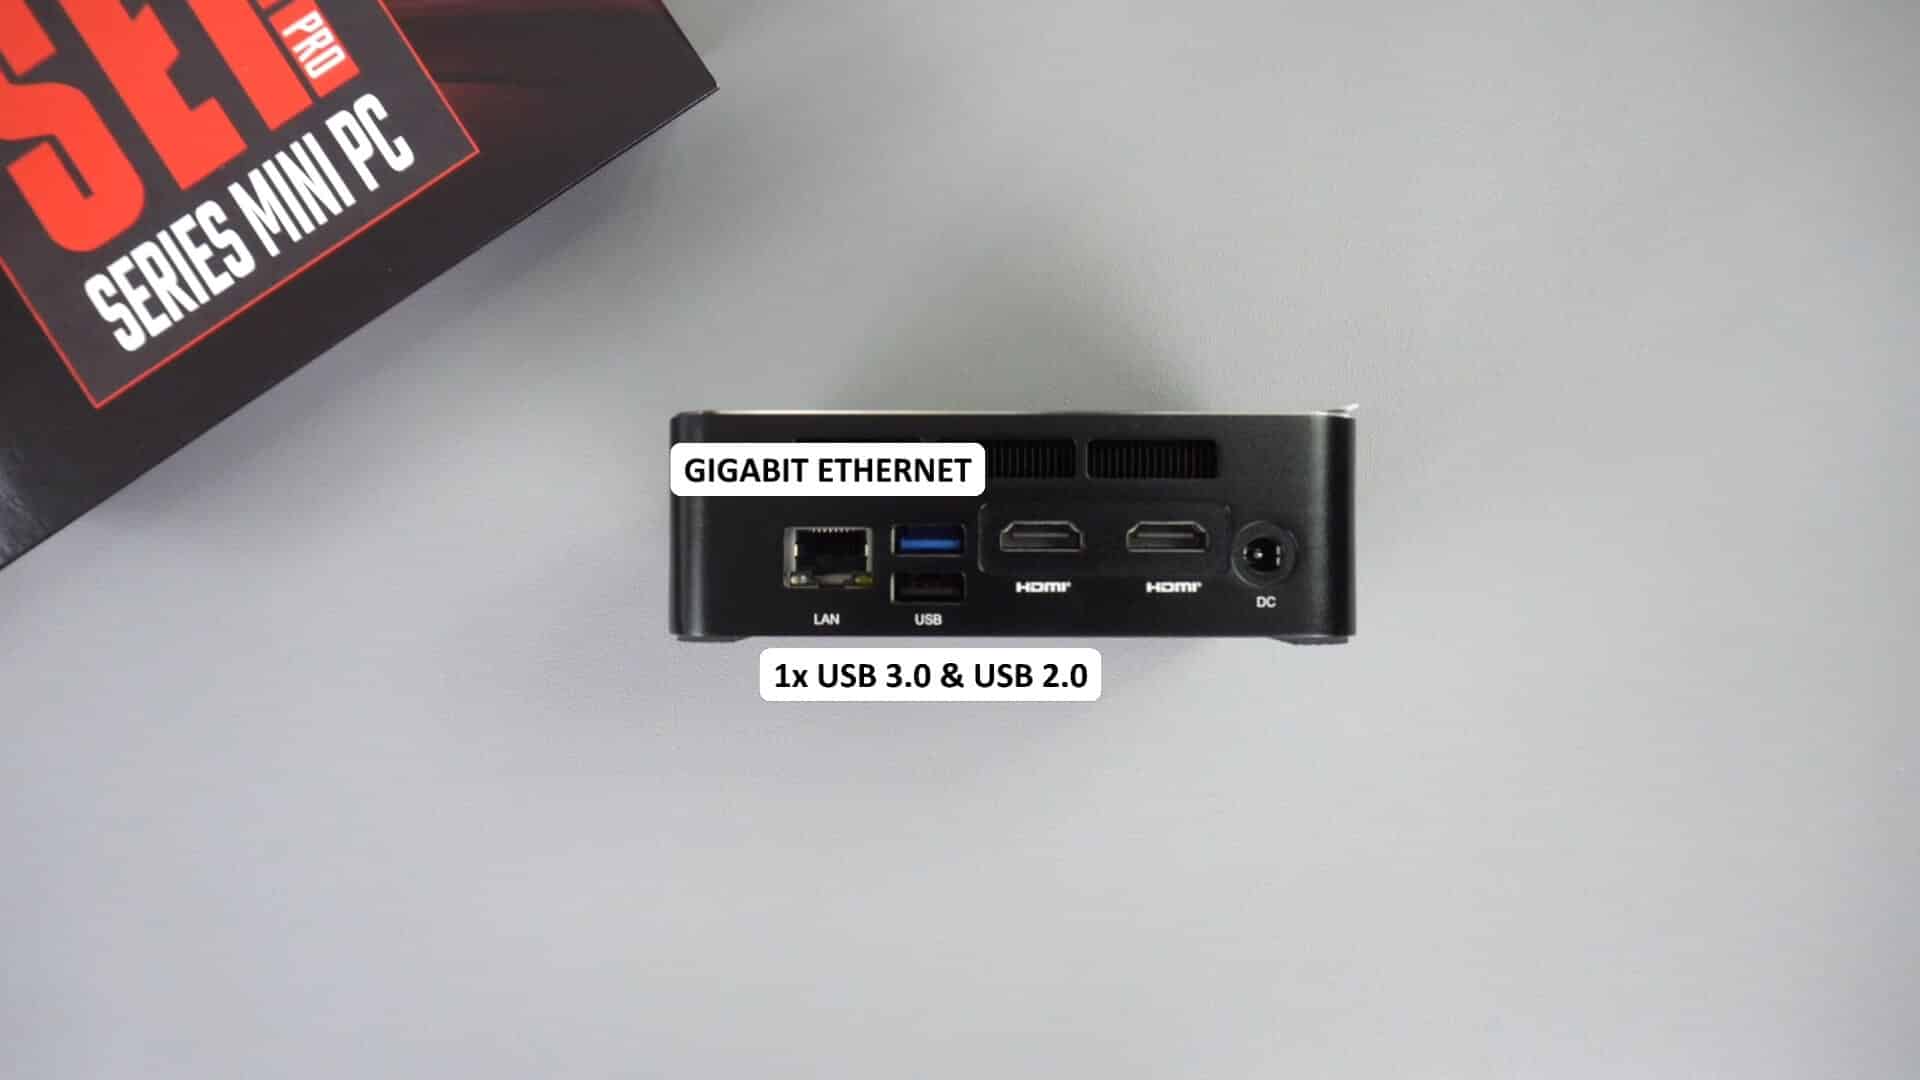 Beelink SER5 PRO 5600H Review with video - Ryzen powered office mini PC -  DroiX Blogs